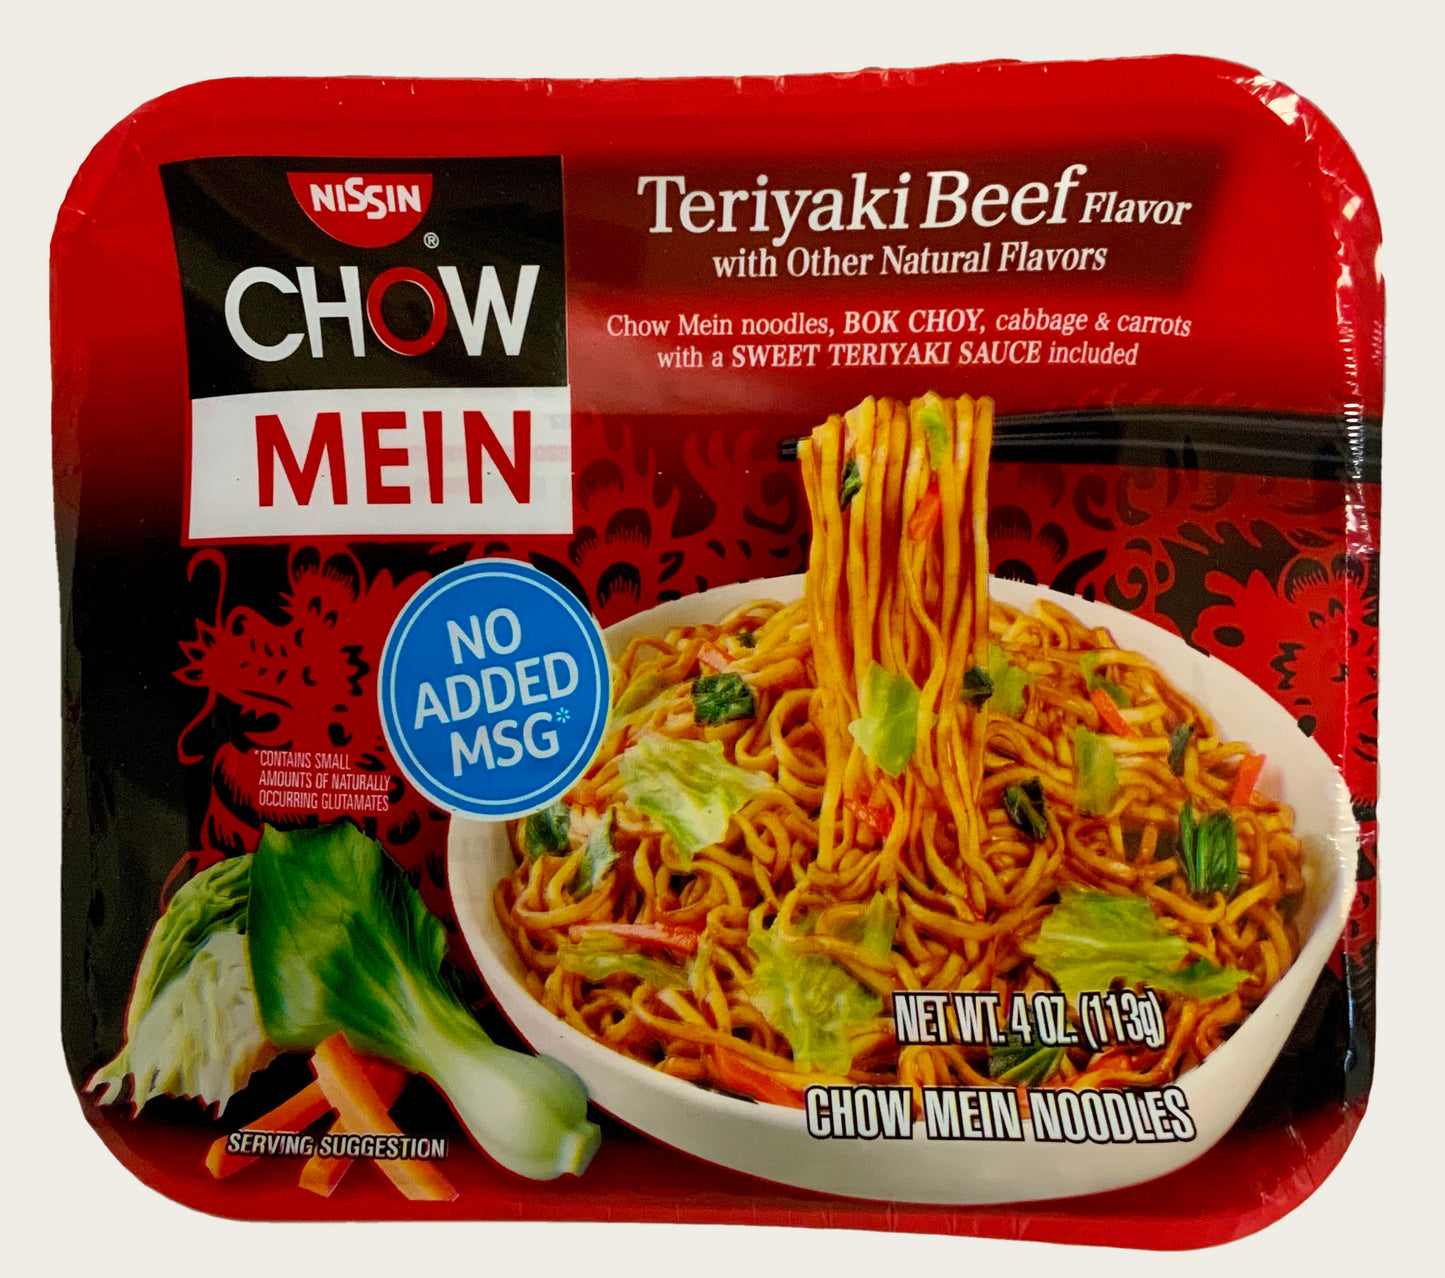 Nissin Chow Mein Teriyaki Beef Flavor - 4 oz